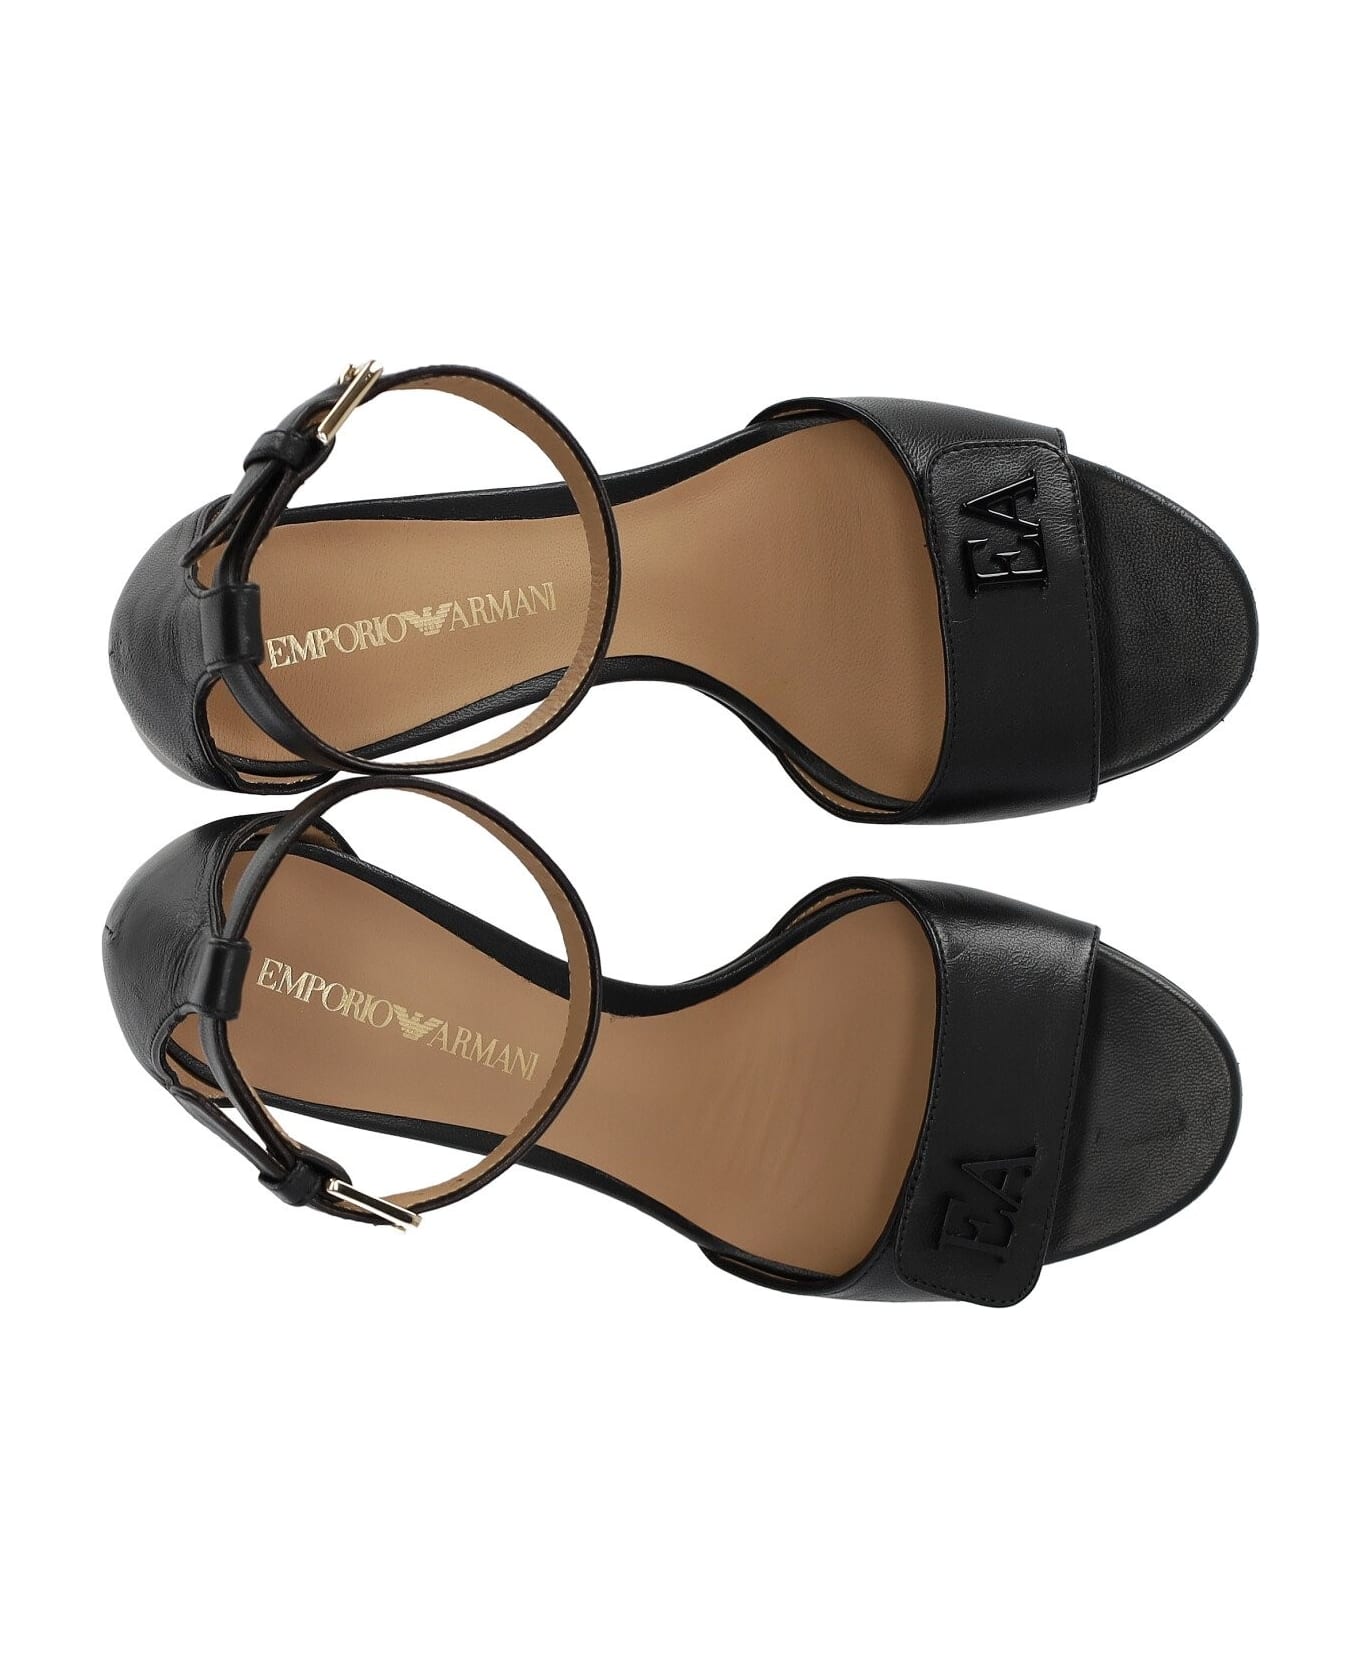 Emporio Armani Black Heeled Sandal - Nero